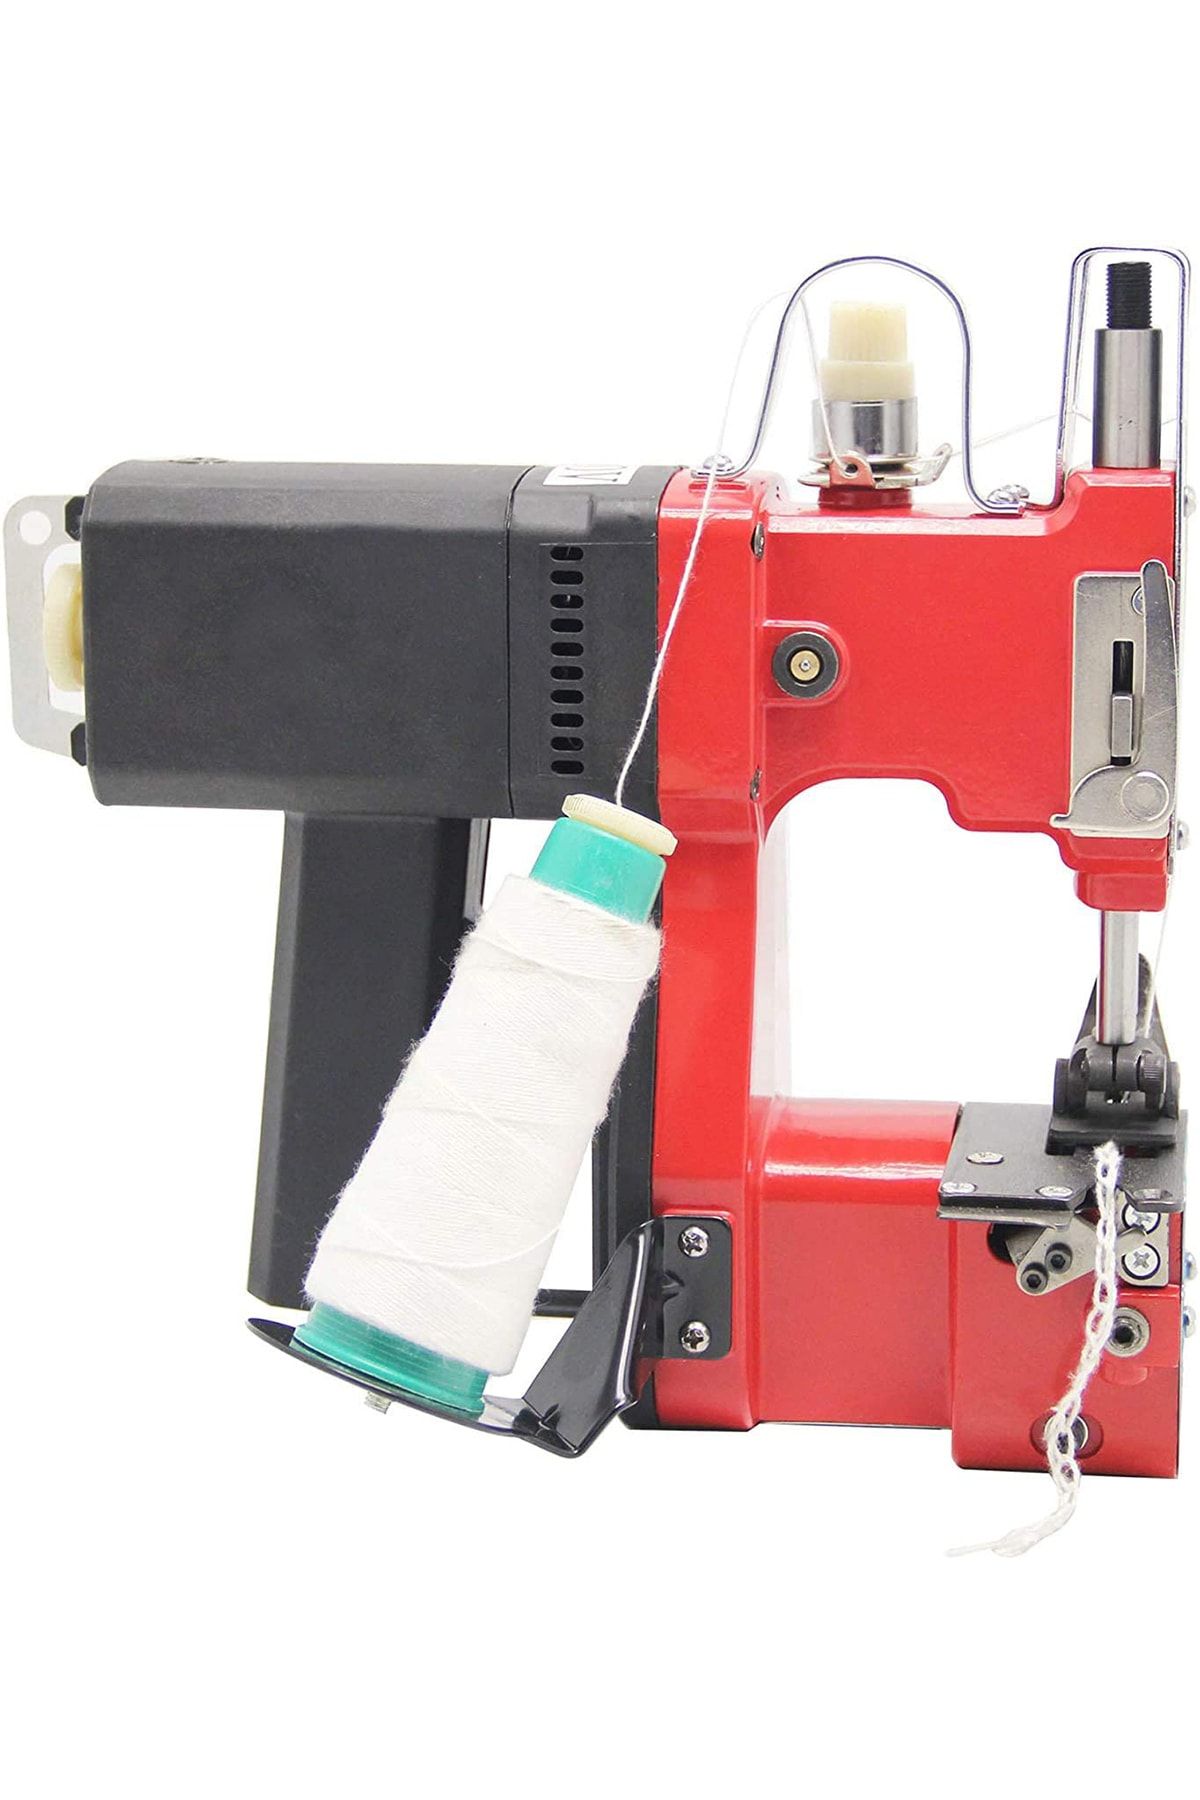 hodbehod Gonghu Gk9-1001 Şarjlı Portatif Akülü Çuval Ağzı Dikme Makinesi